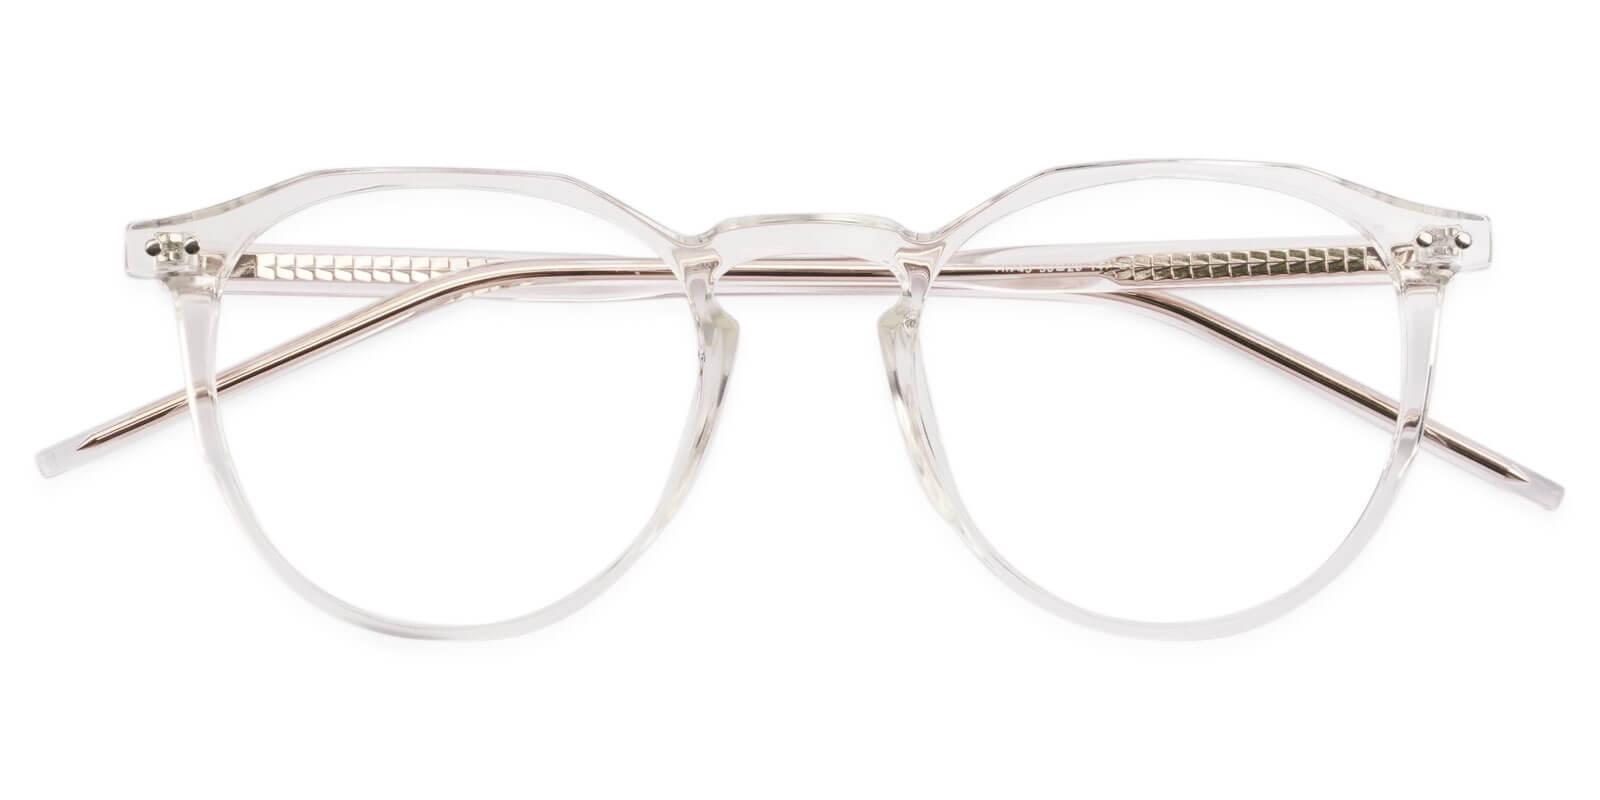 Mariner Translucent Acetate Eyeglasses , SpringHinges , UniversalBridgeFit Frames from ABBE Glasses